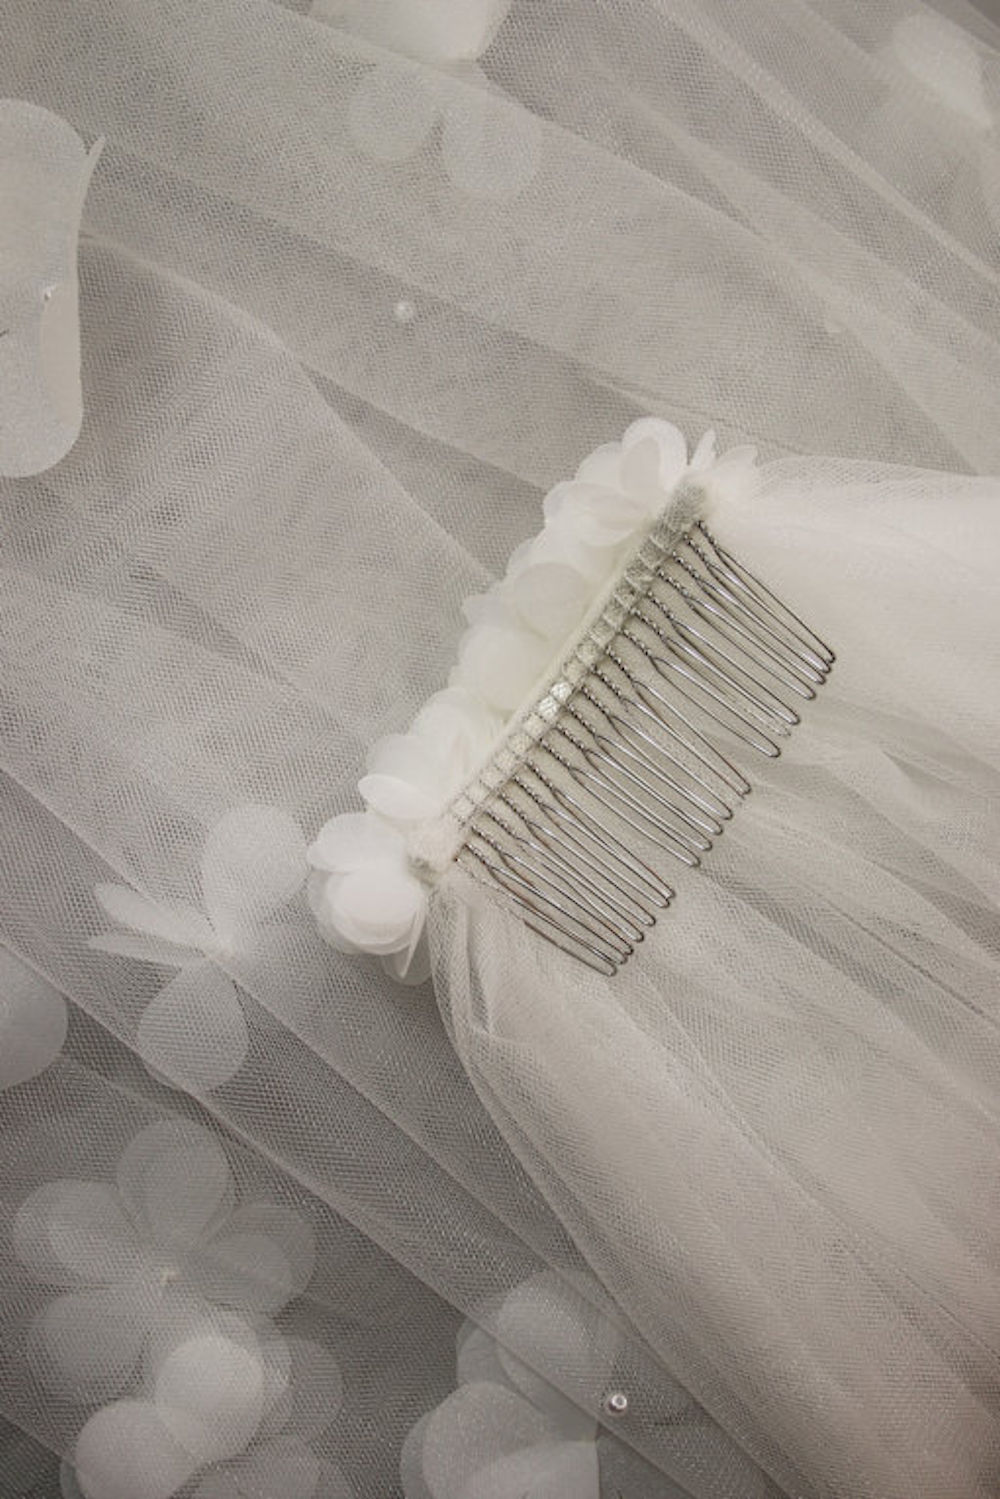 Melbourne Wedding Veils | Veils - SARA Bridal Veils By Kim Alpha